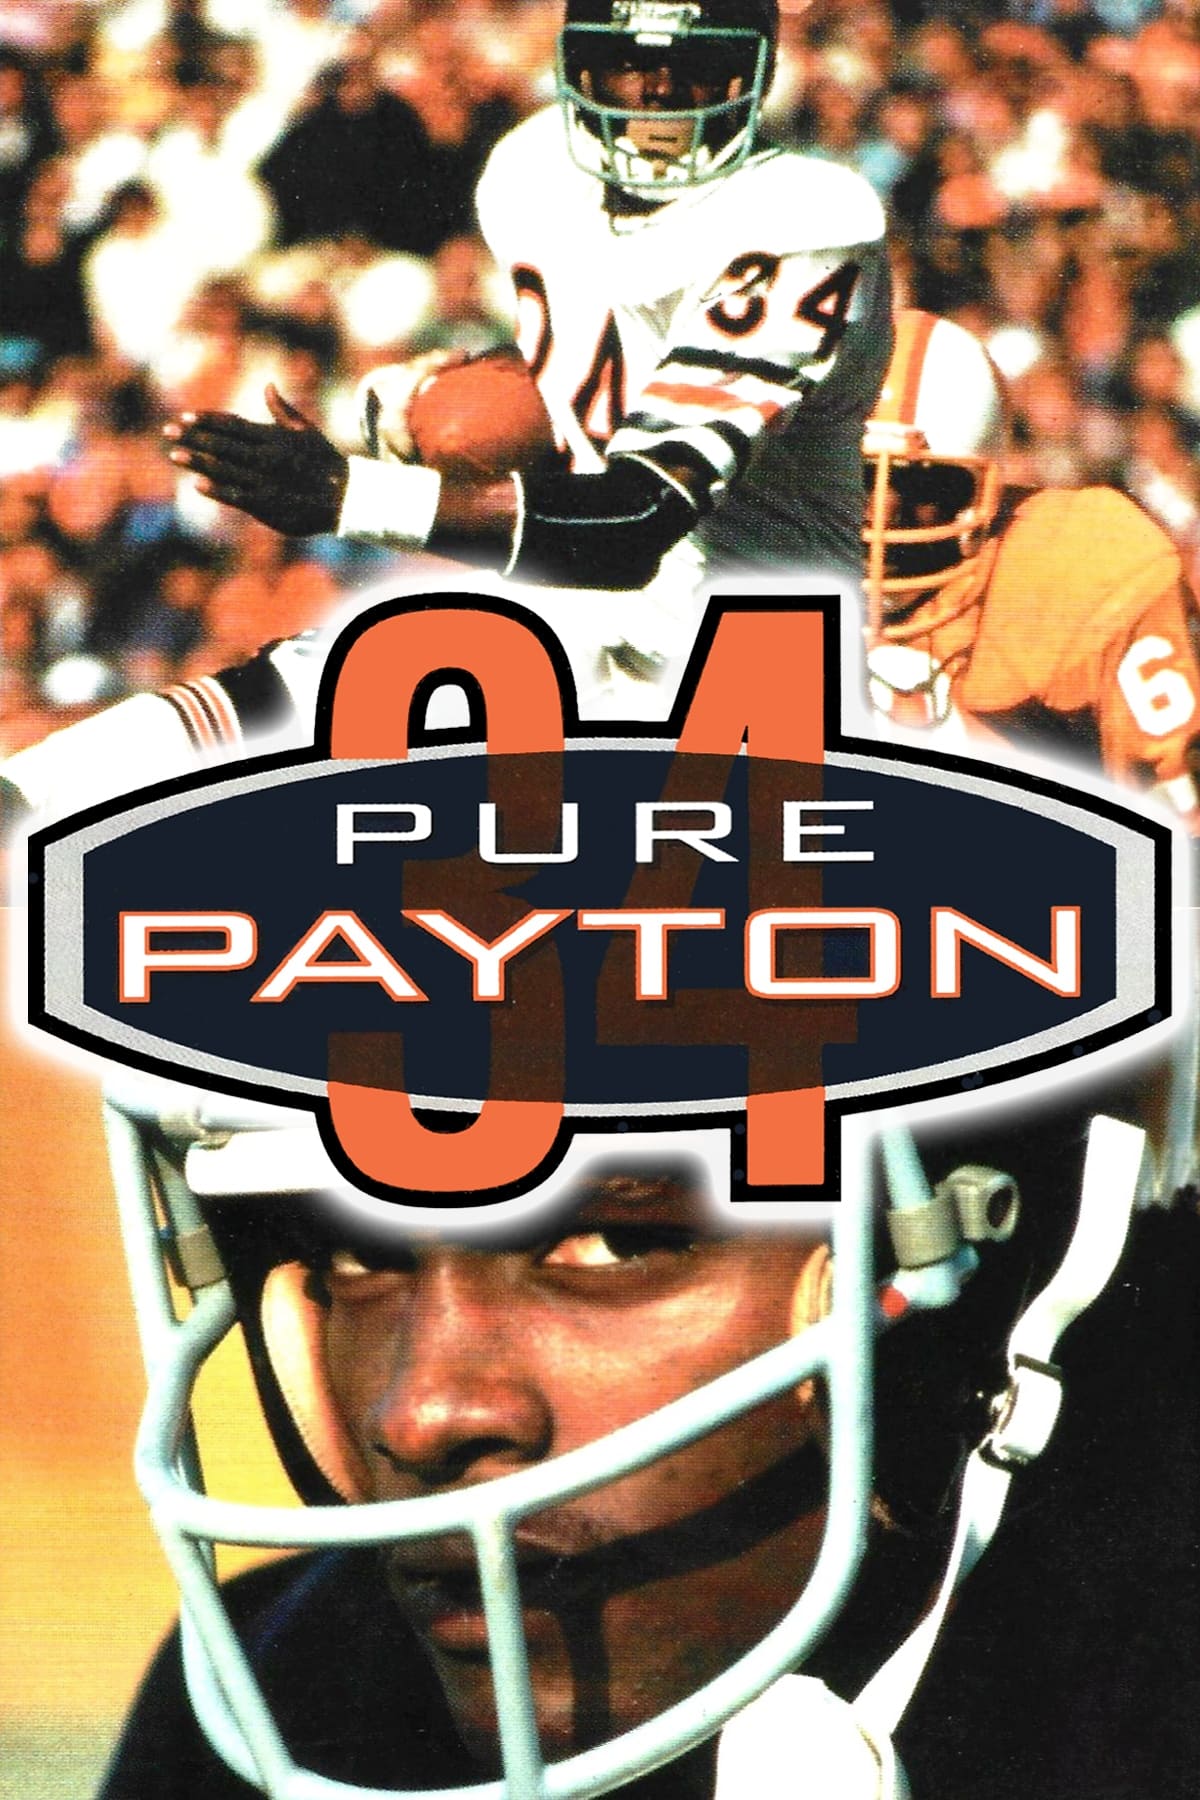 Pure Payton